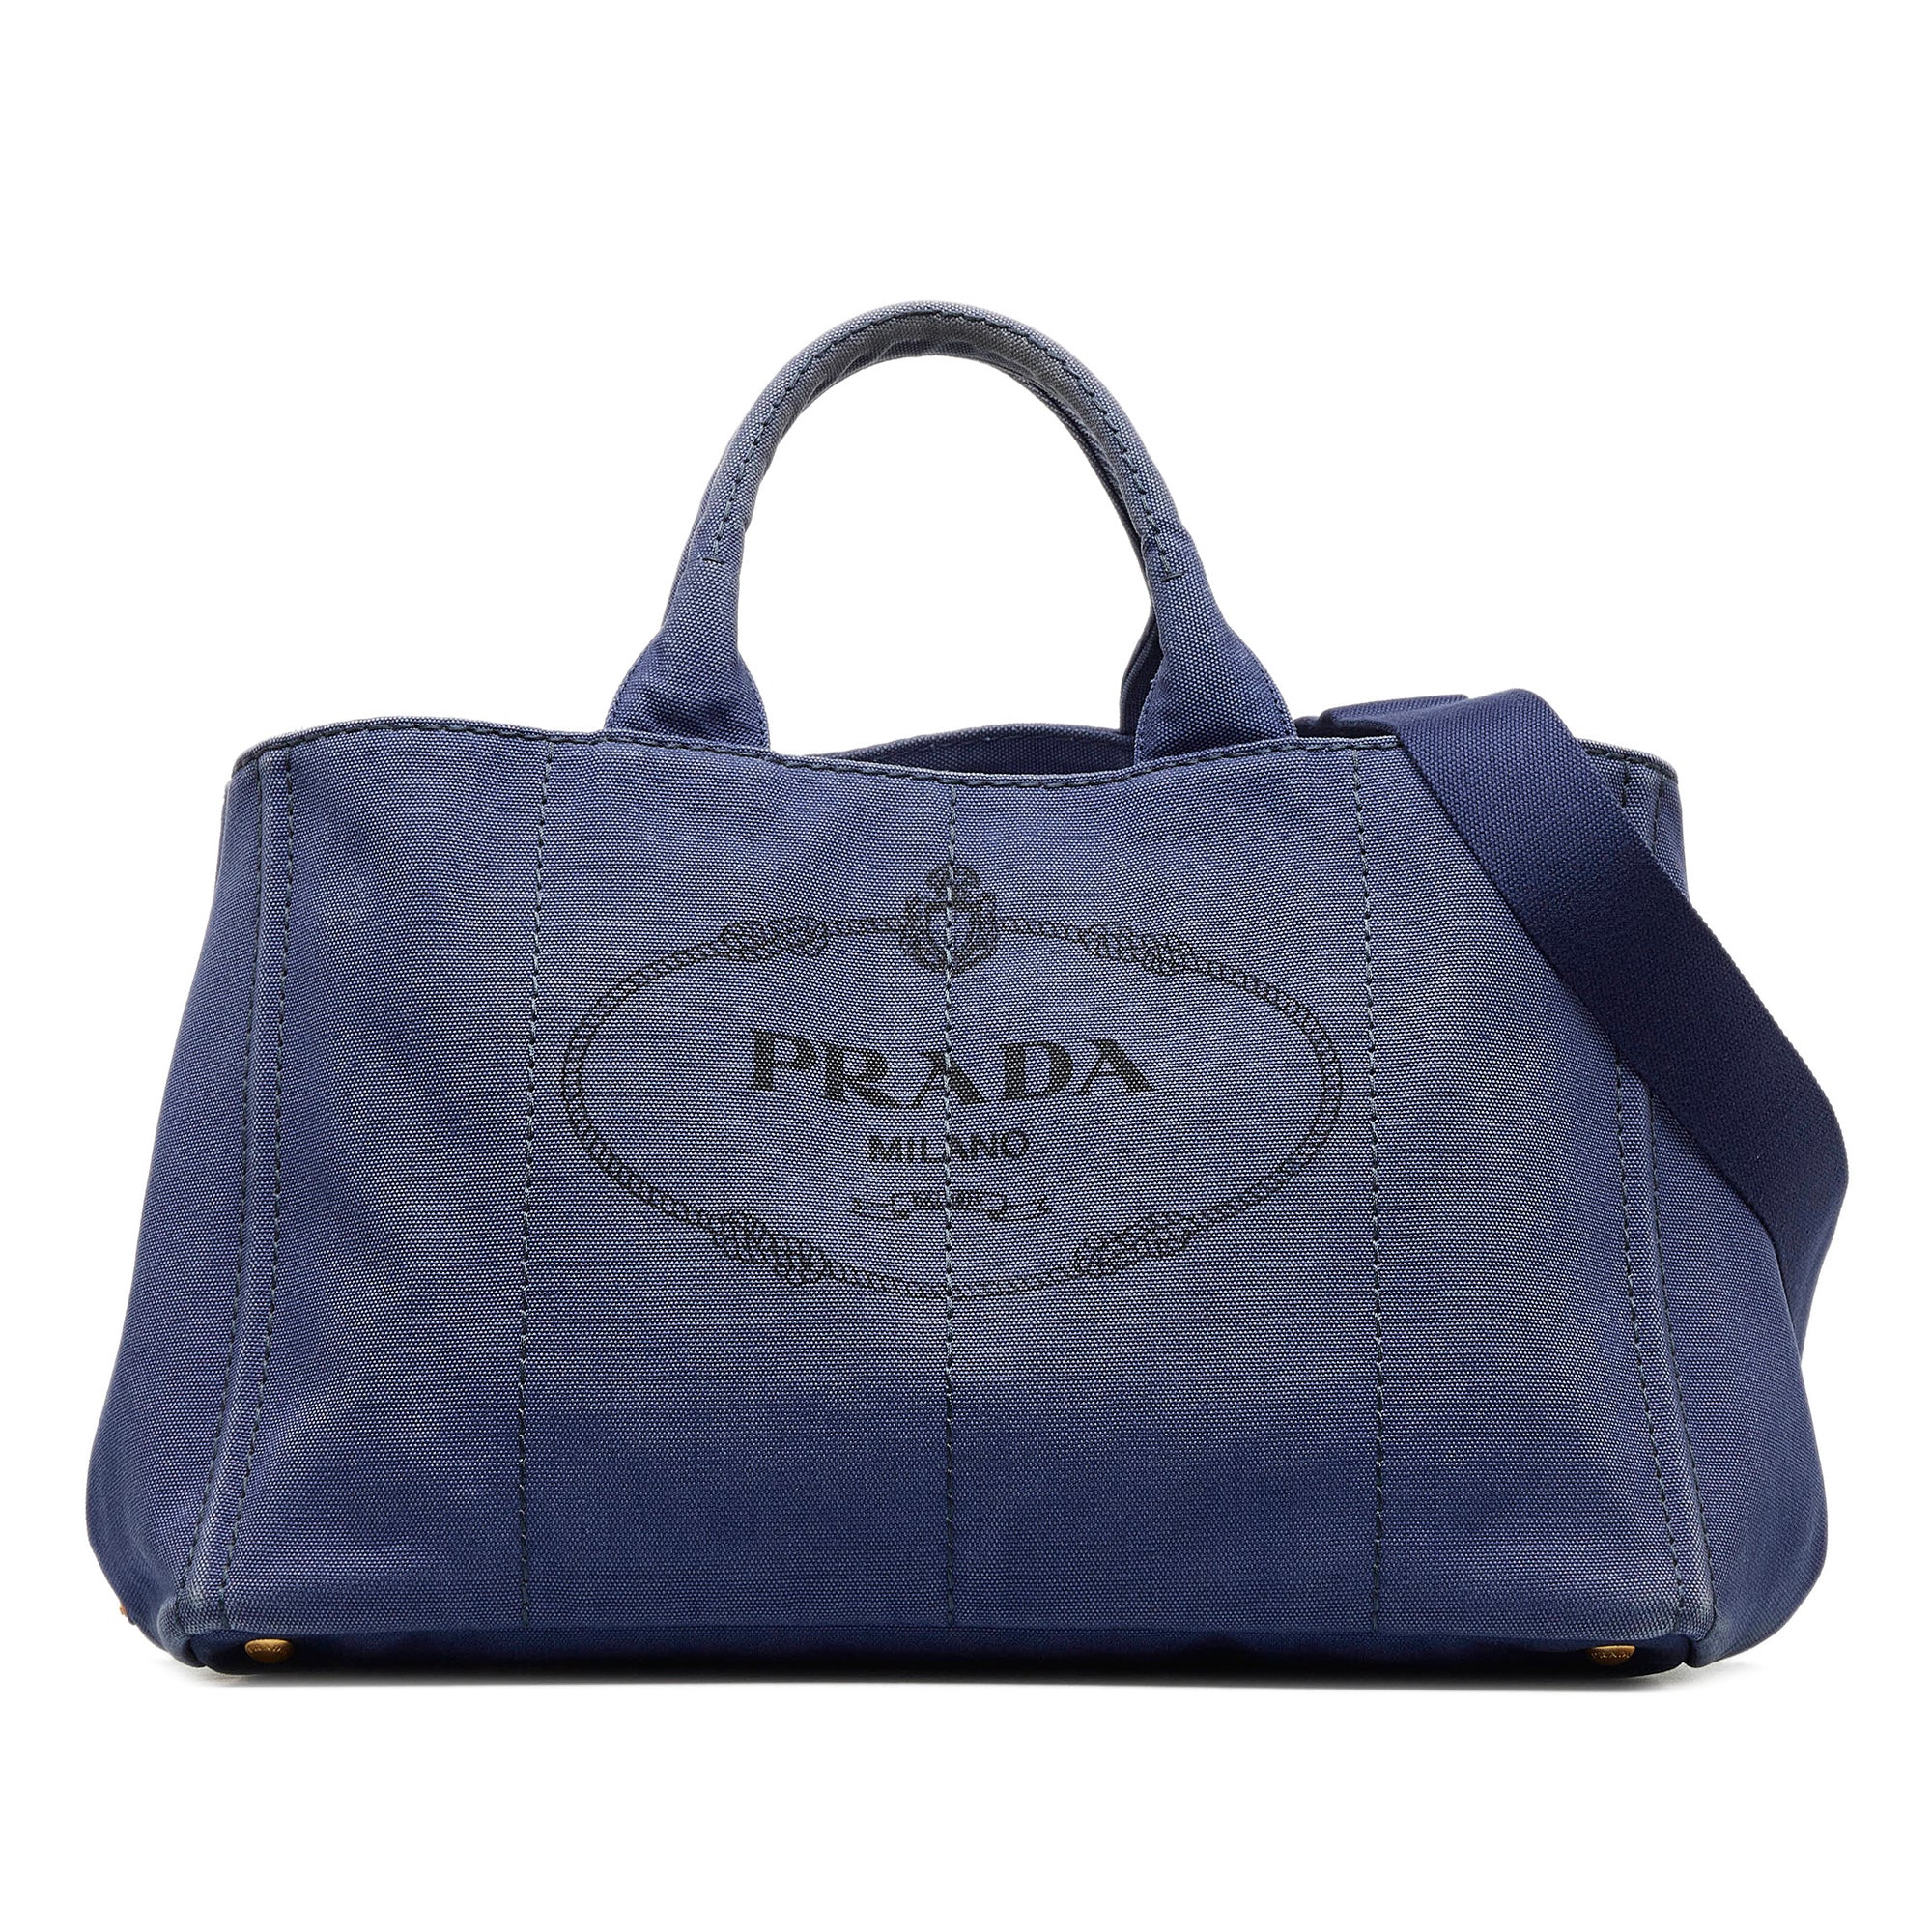 Prada Denim Bag, Shop The Largest Collection